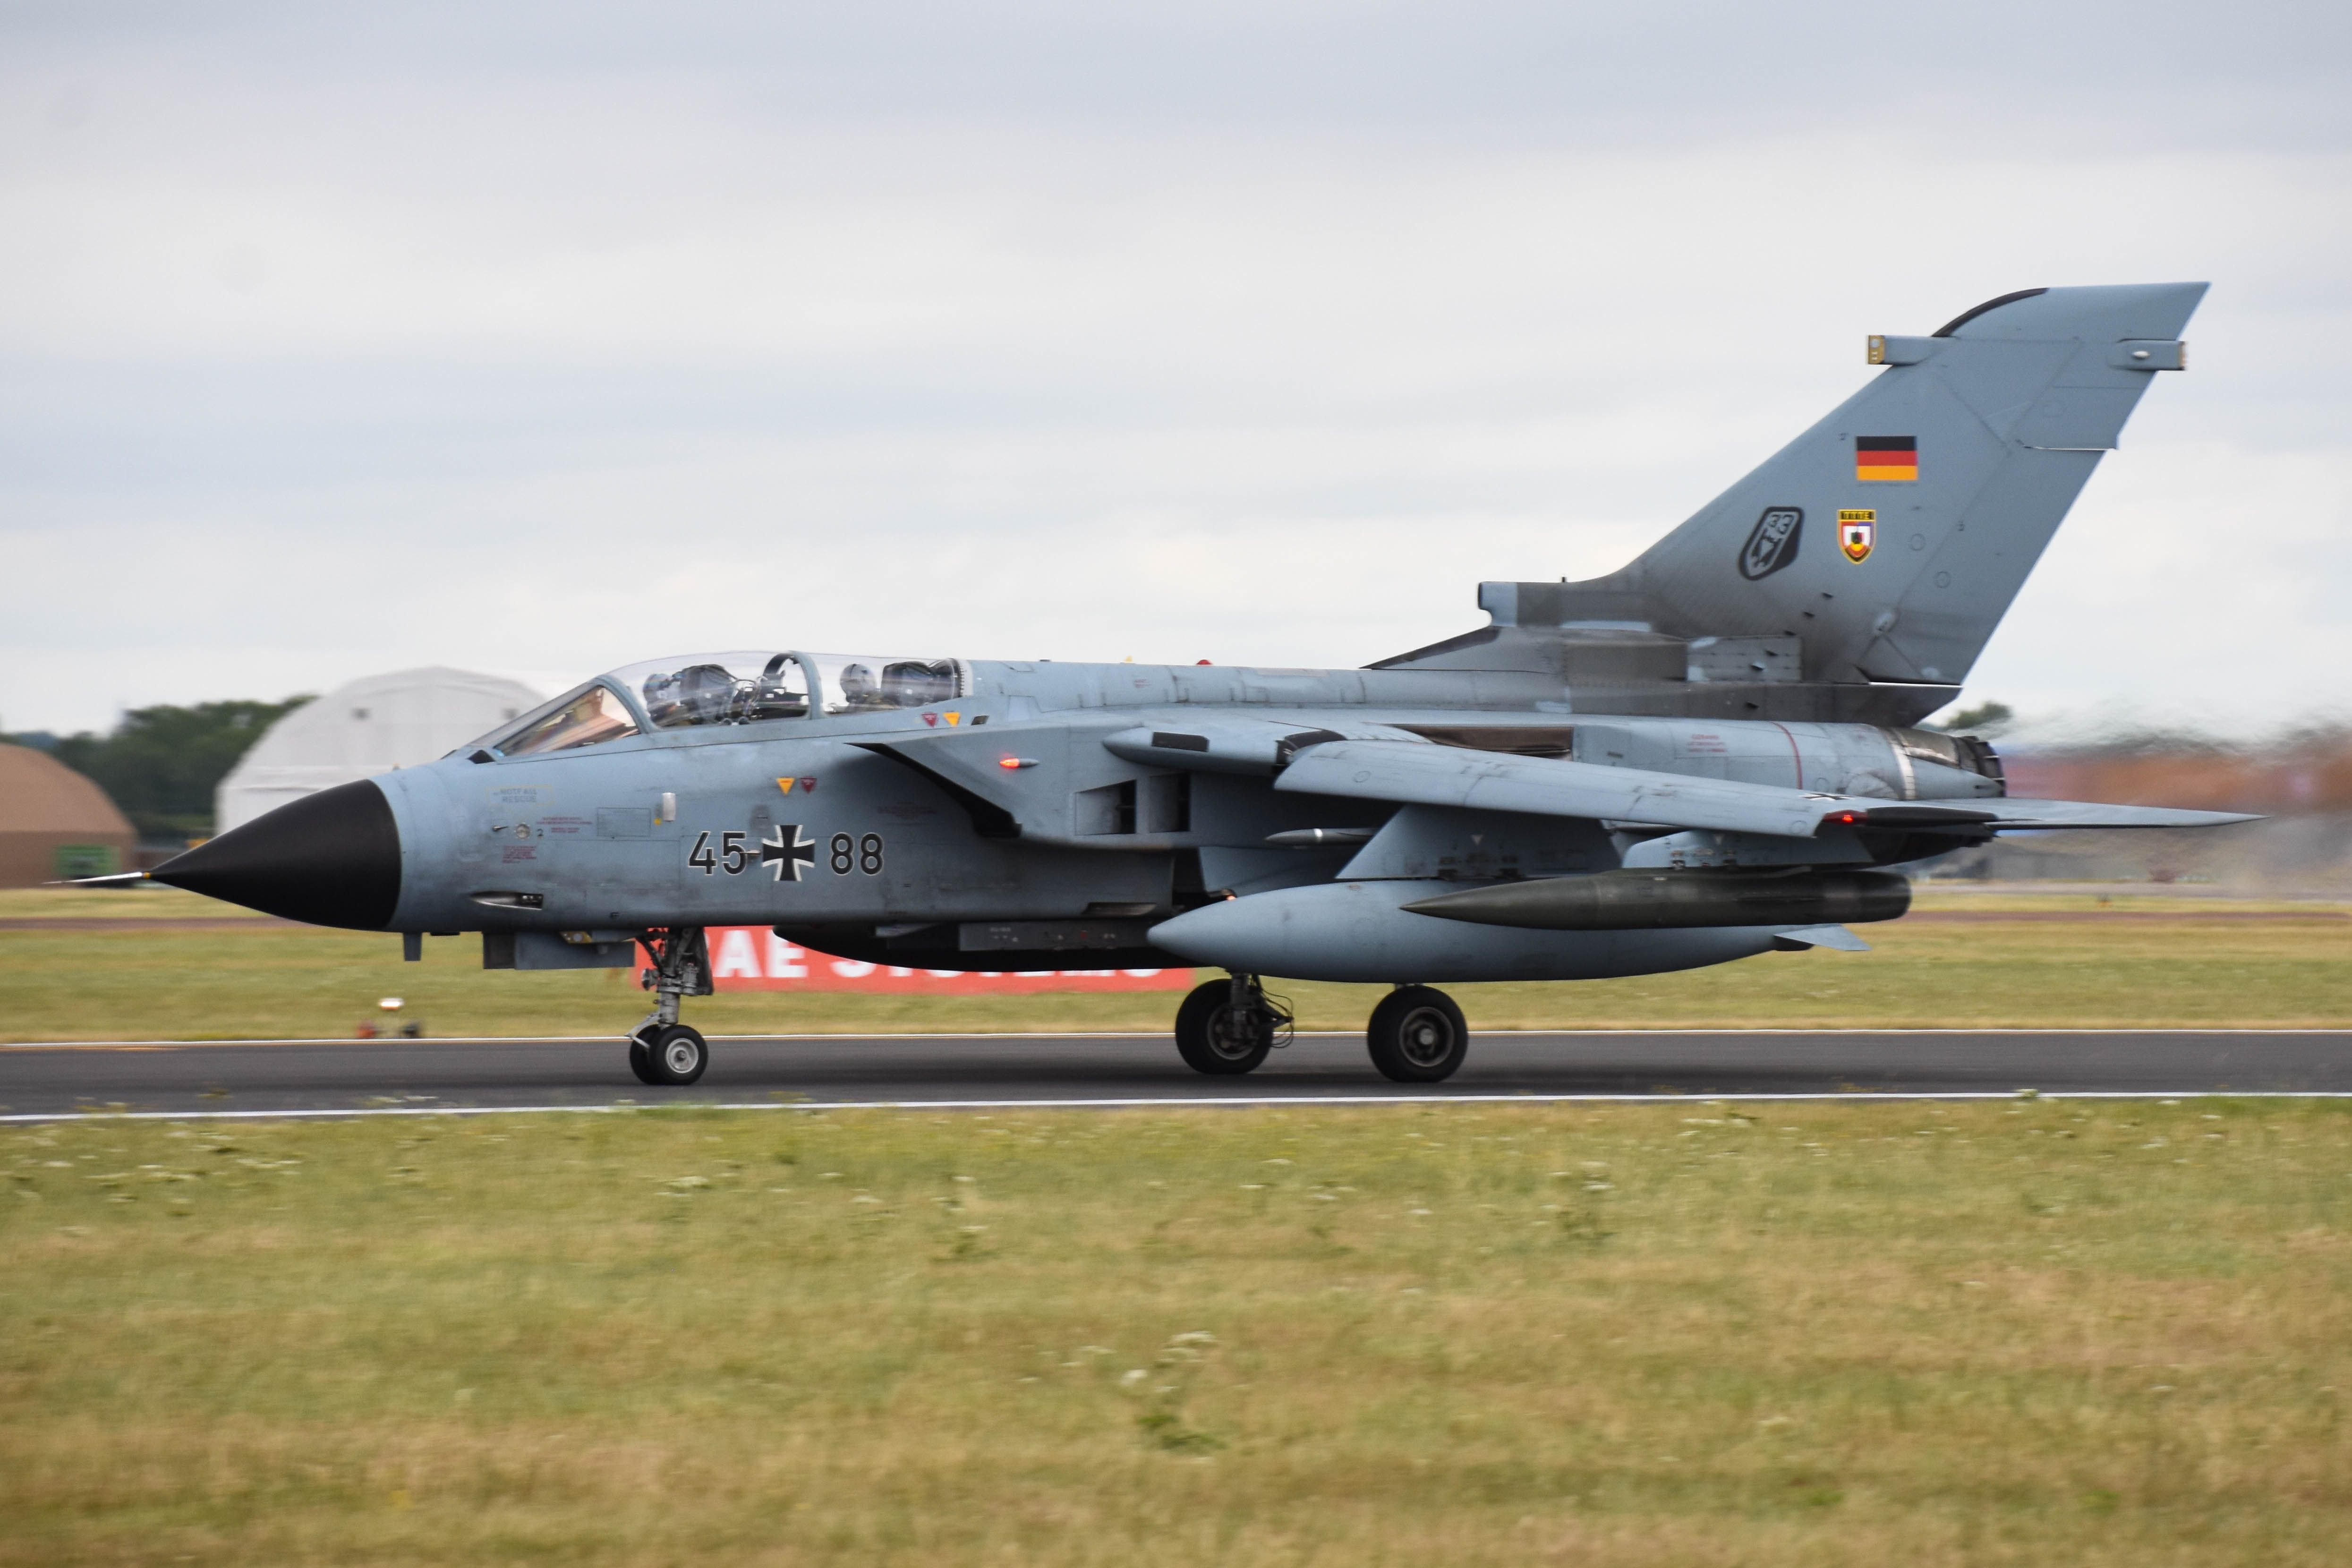 45+88/45+88 German Air Force Panavia Tornado Airframe Information - AVSpotters.com